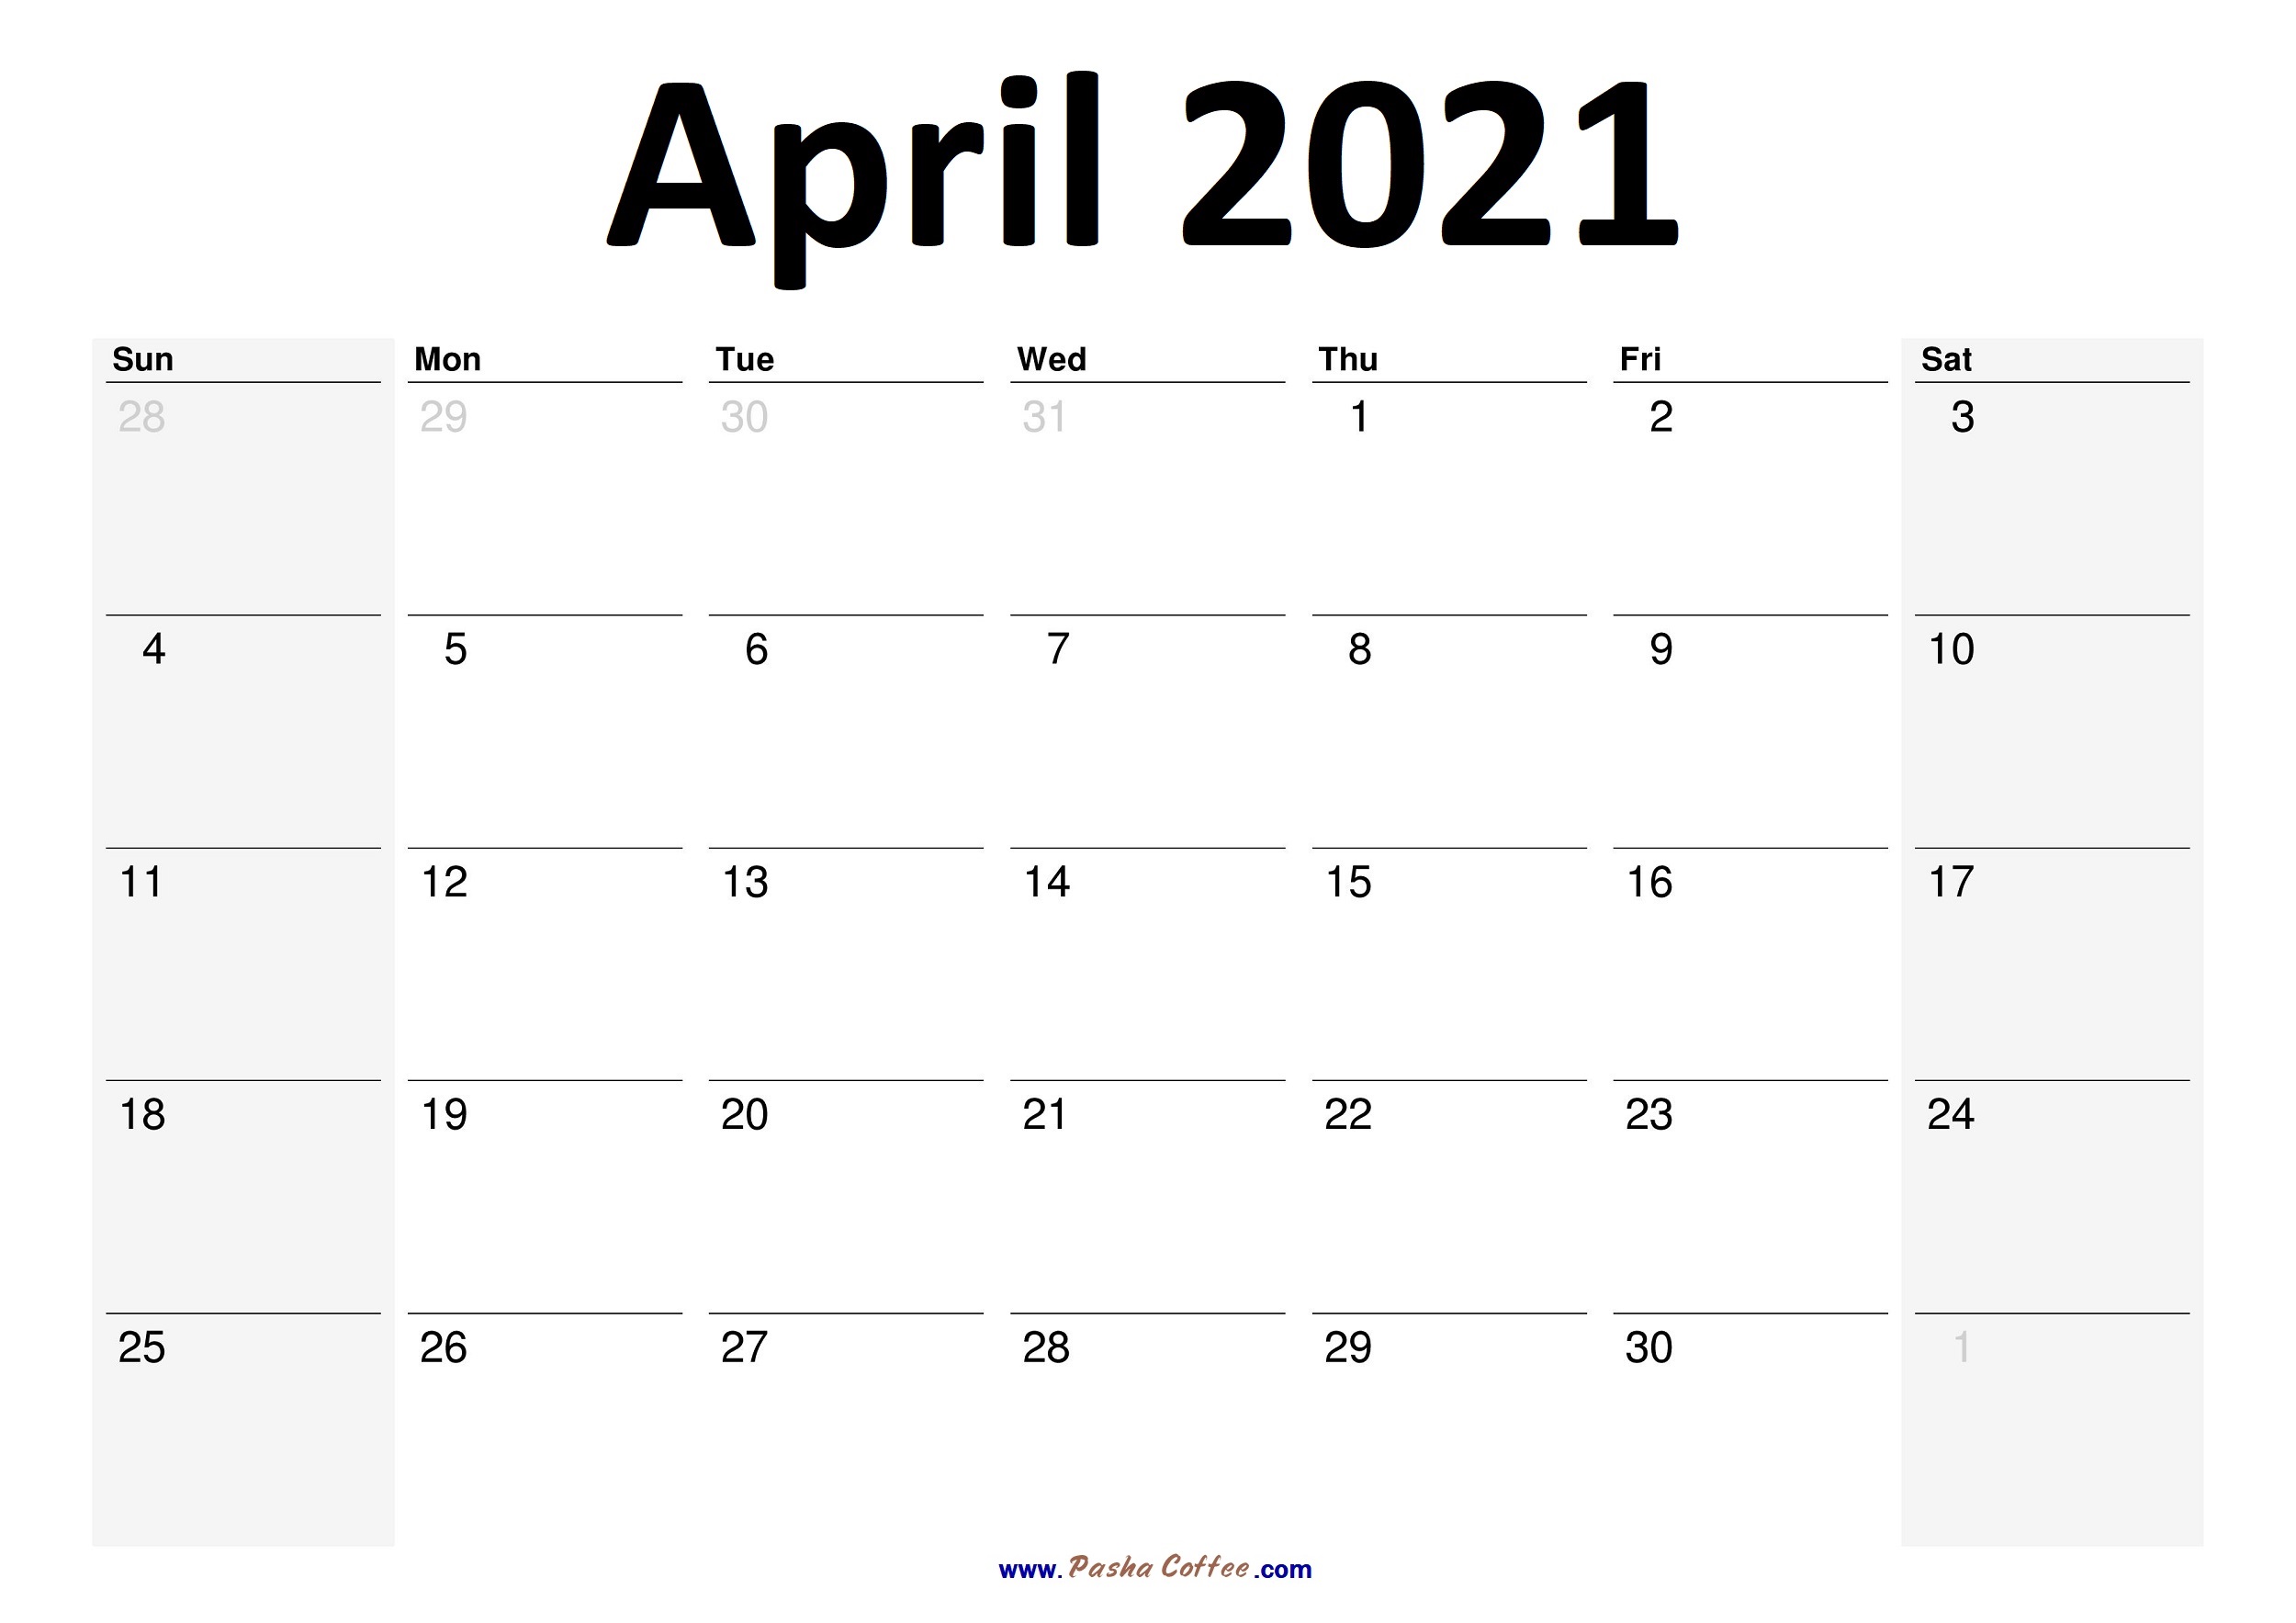 2021-April-Calendar-Planner01